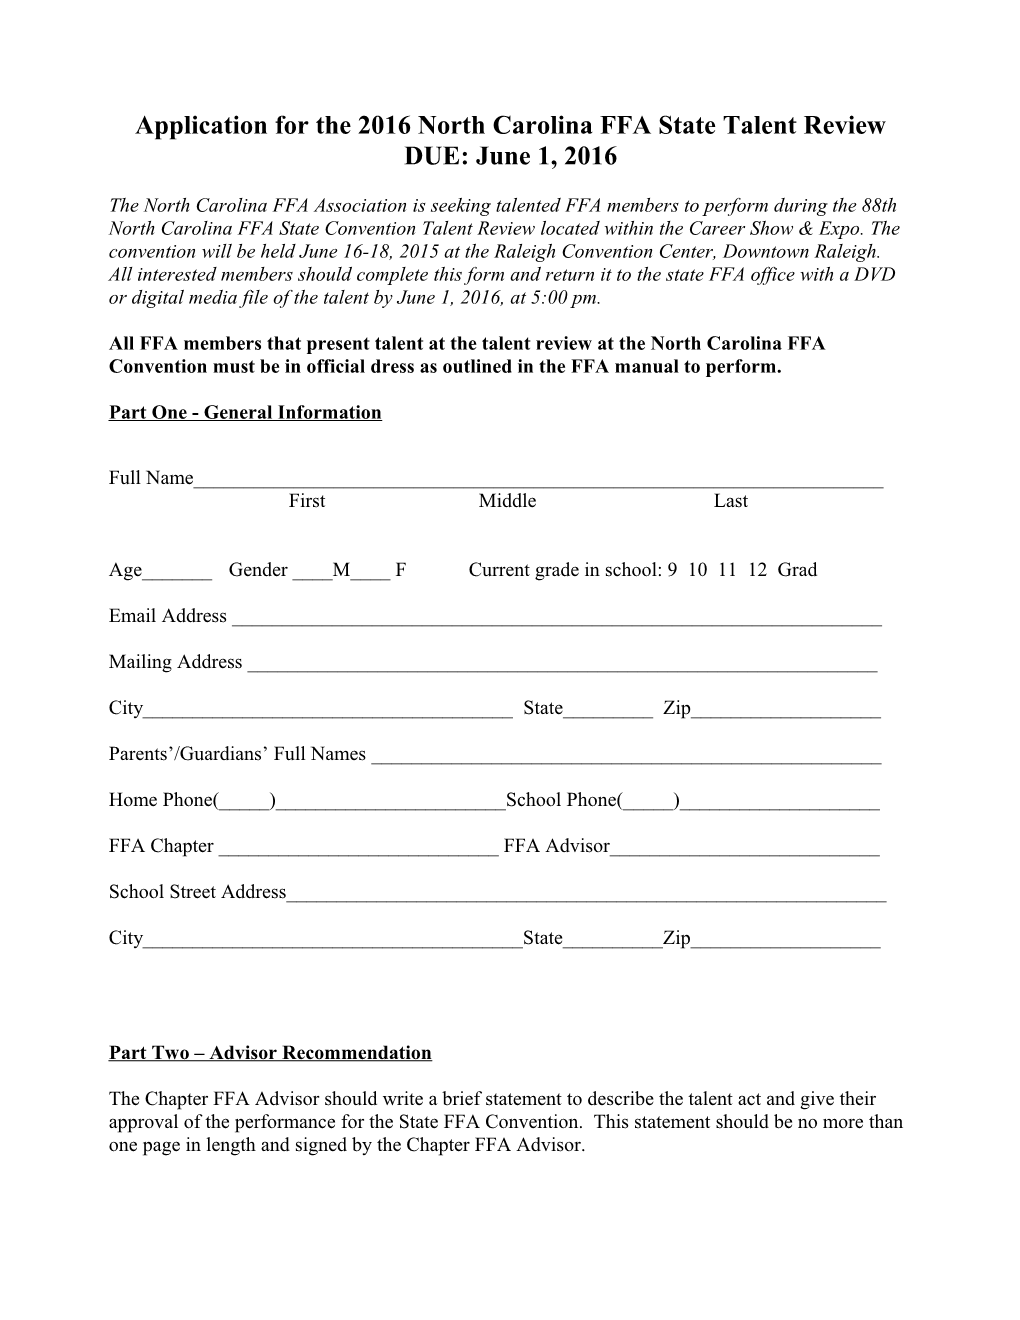 Application for the 2001 North Carolina FFA Chorus